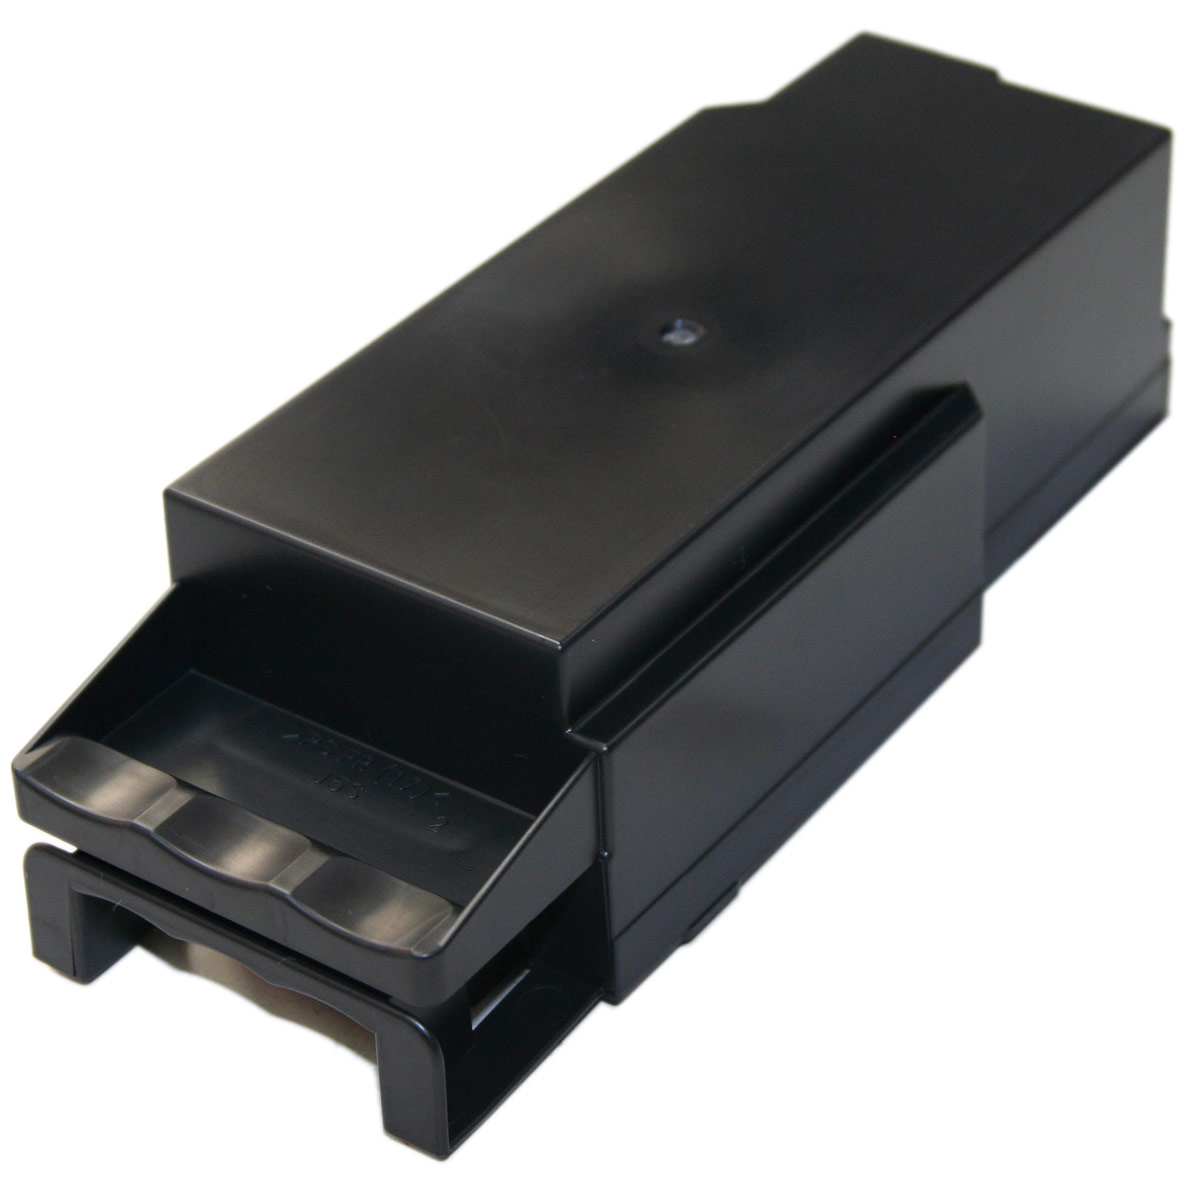 Waste Inkhopper - Ricoh SG 7100DN